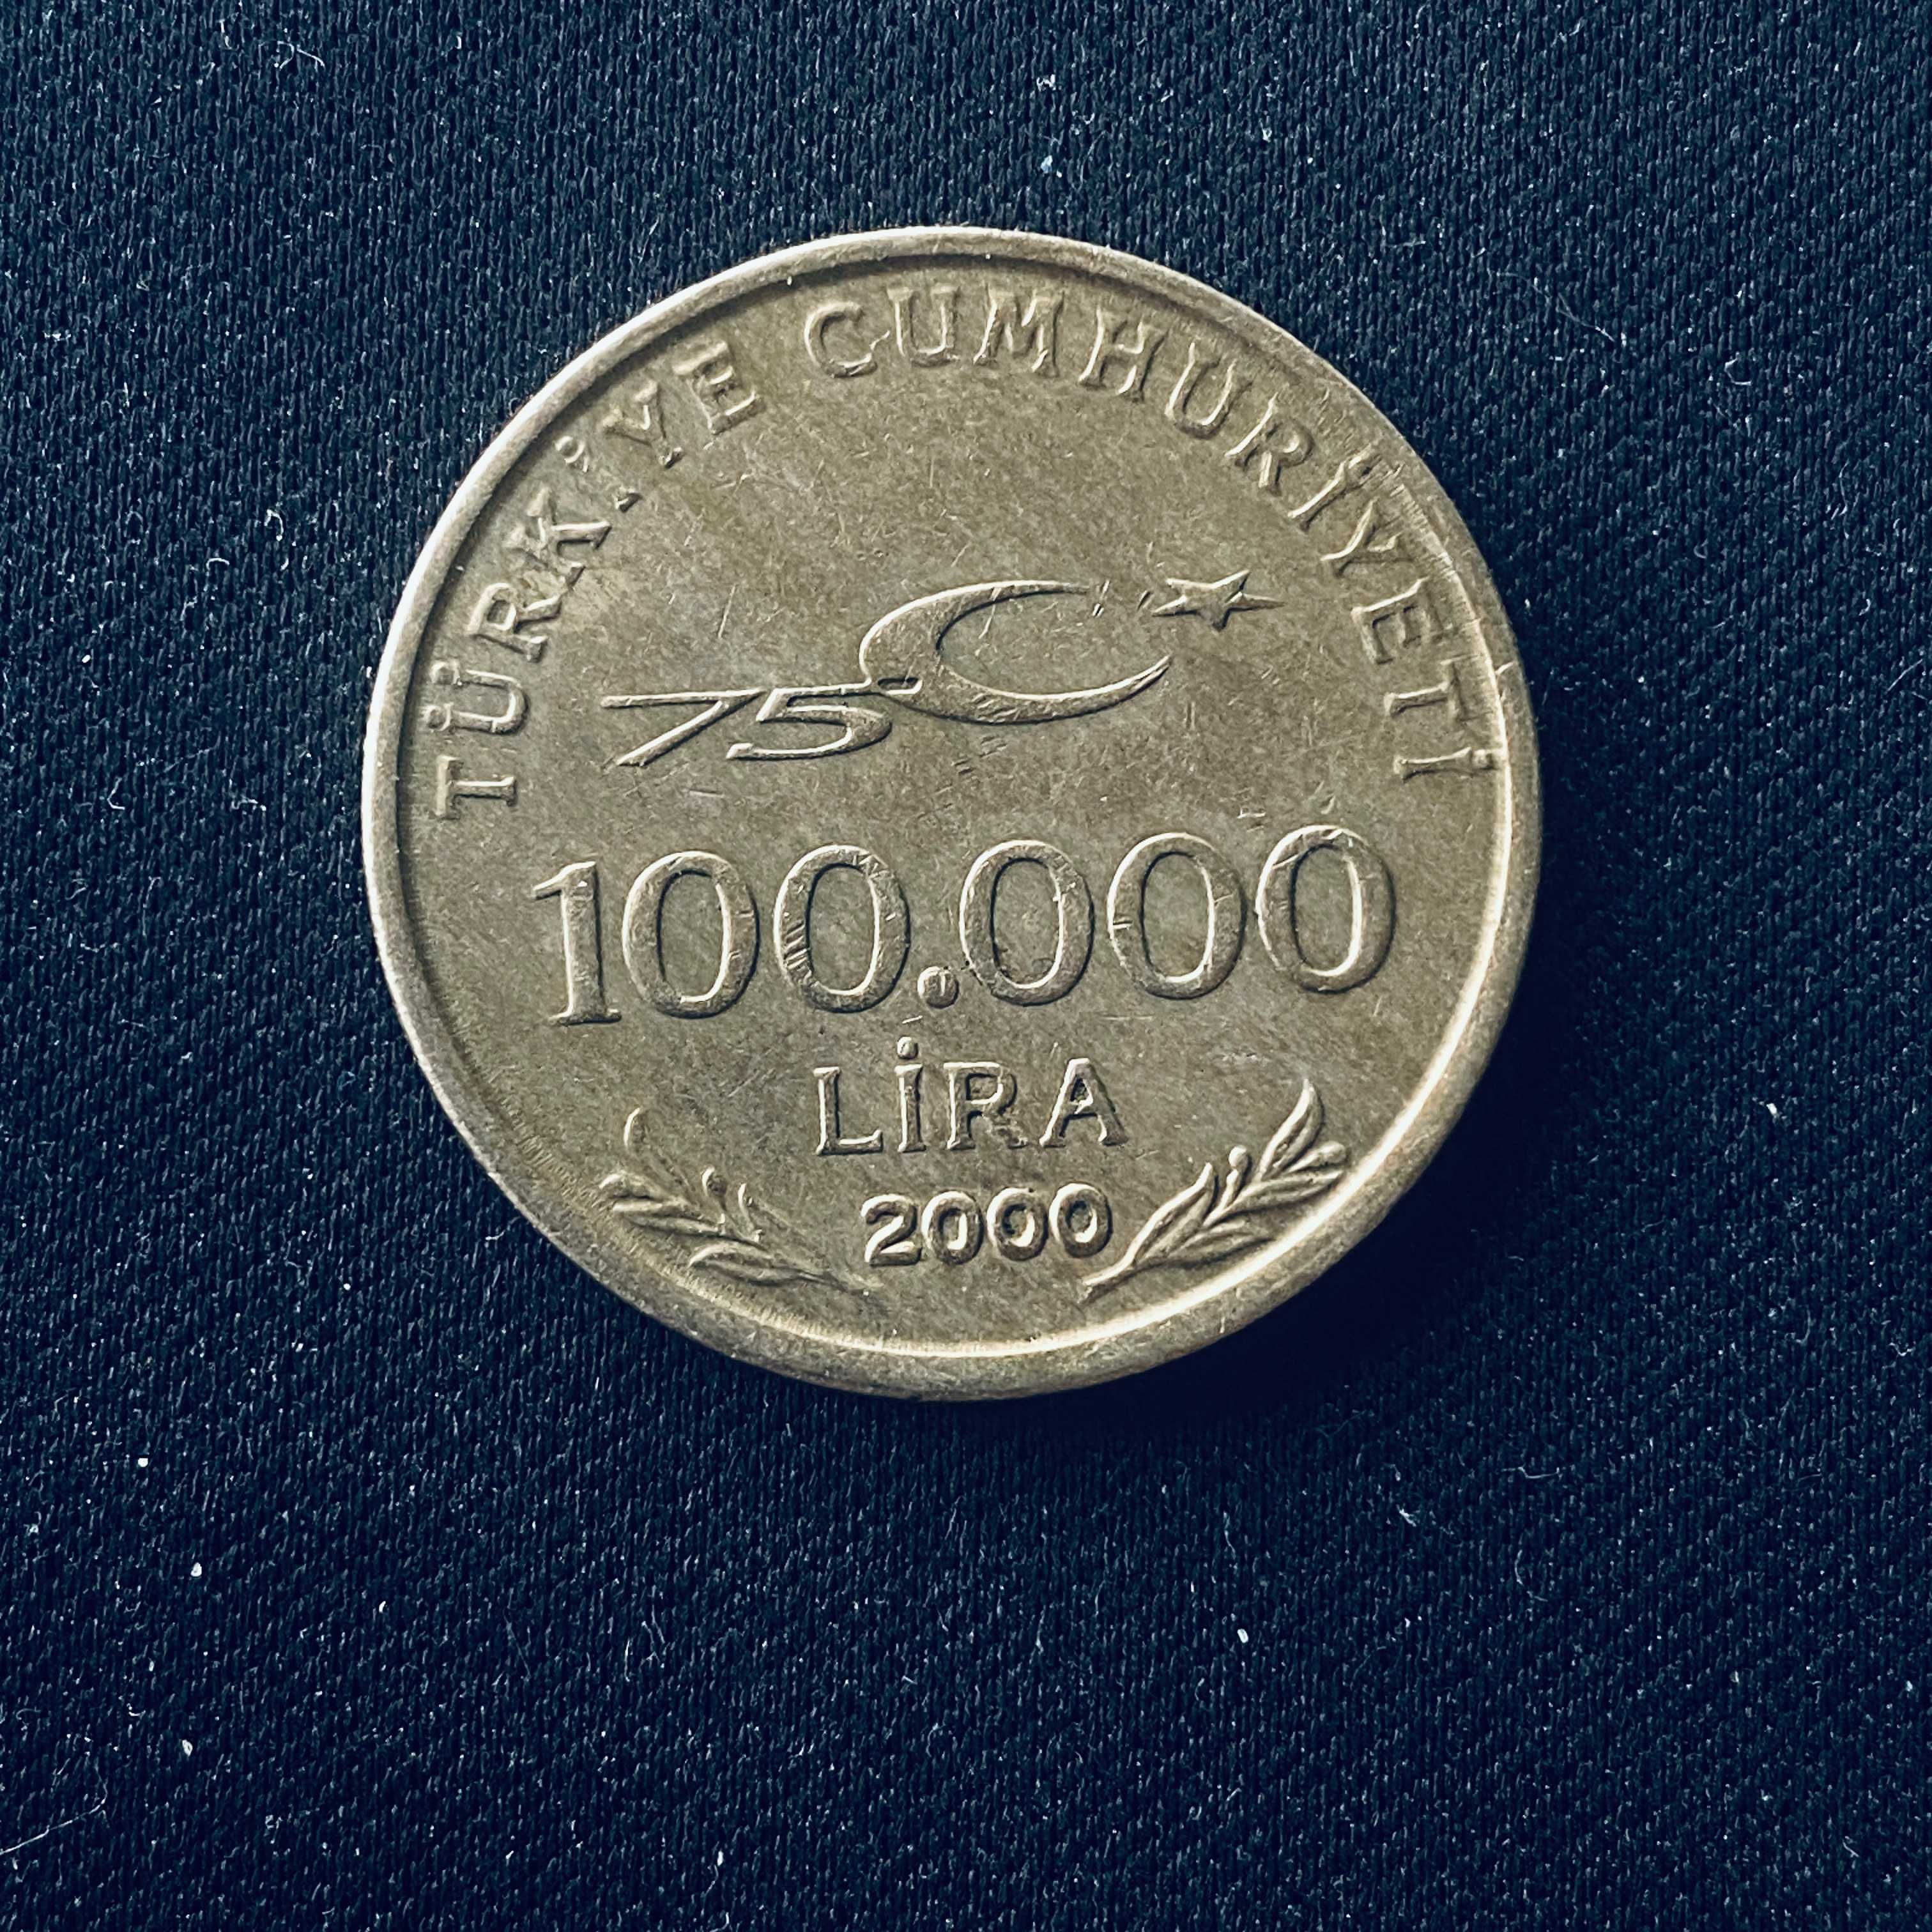 Moneta Turcja - 100 000 LIRA 2000r